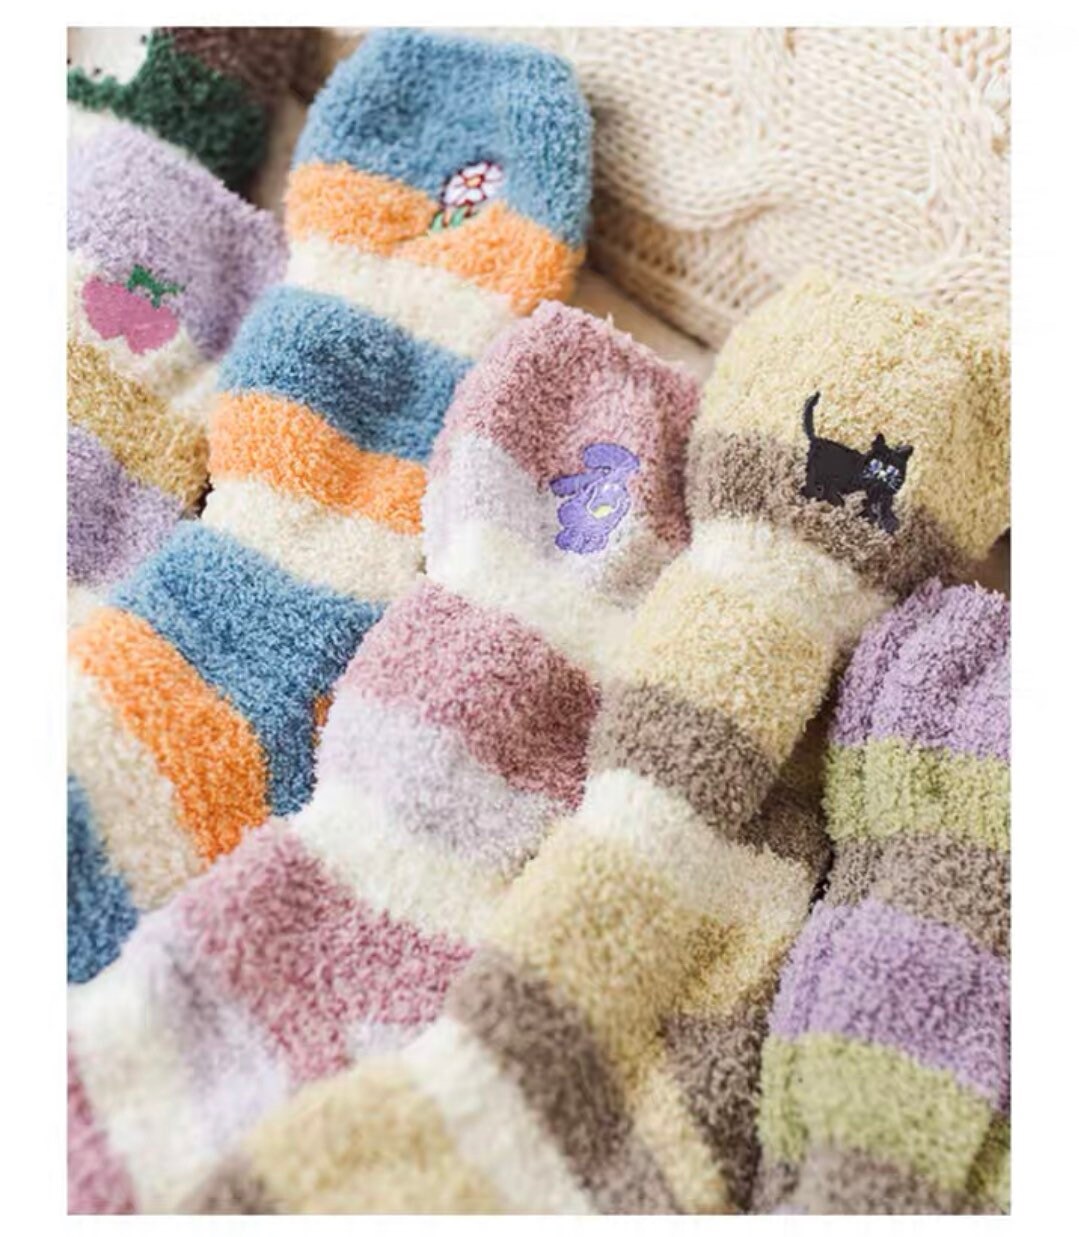 Miss June’s | Women’s | 1 pair | Sleep socks | Cute | Fuzzy | Home wear | Warm | Soft | Gift Idea | Casual | Cozy| Animals| Comfort | Winter